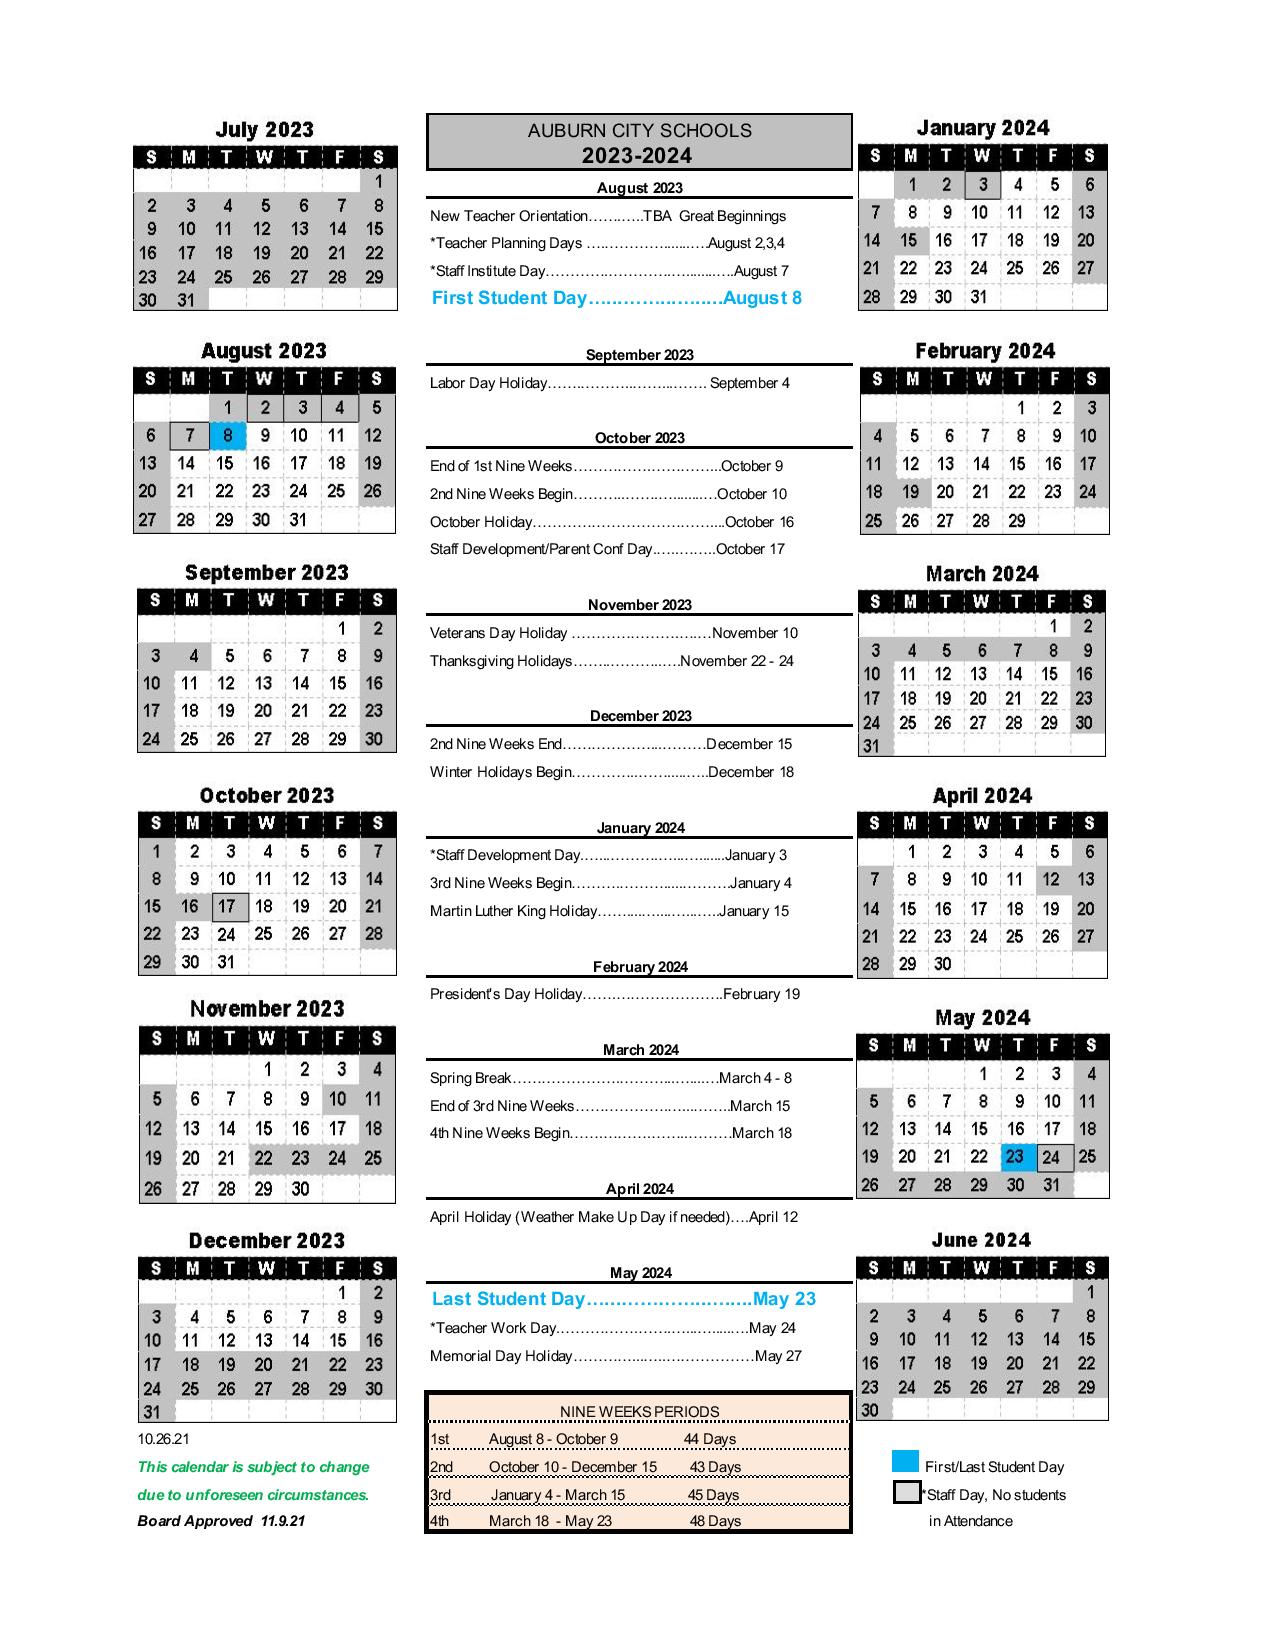 Auburn City Schools Calendar 20232024 in PDF